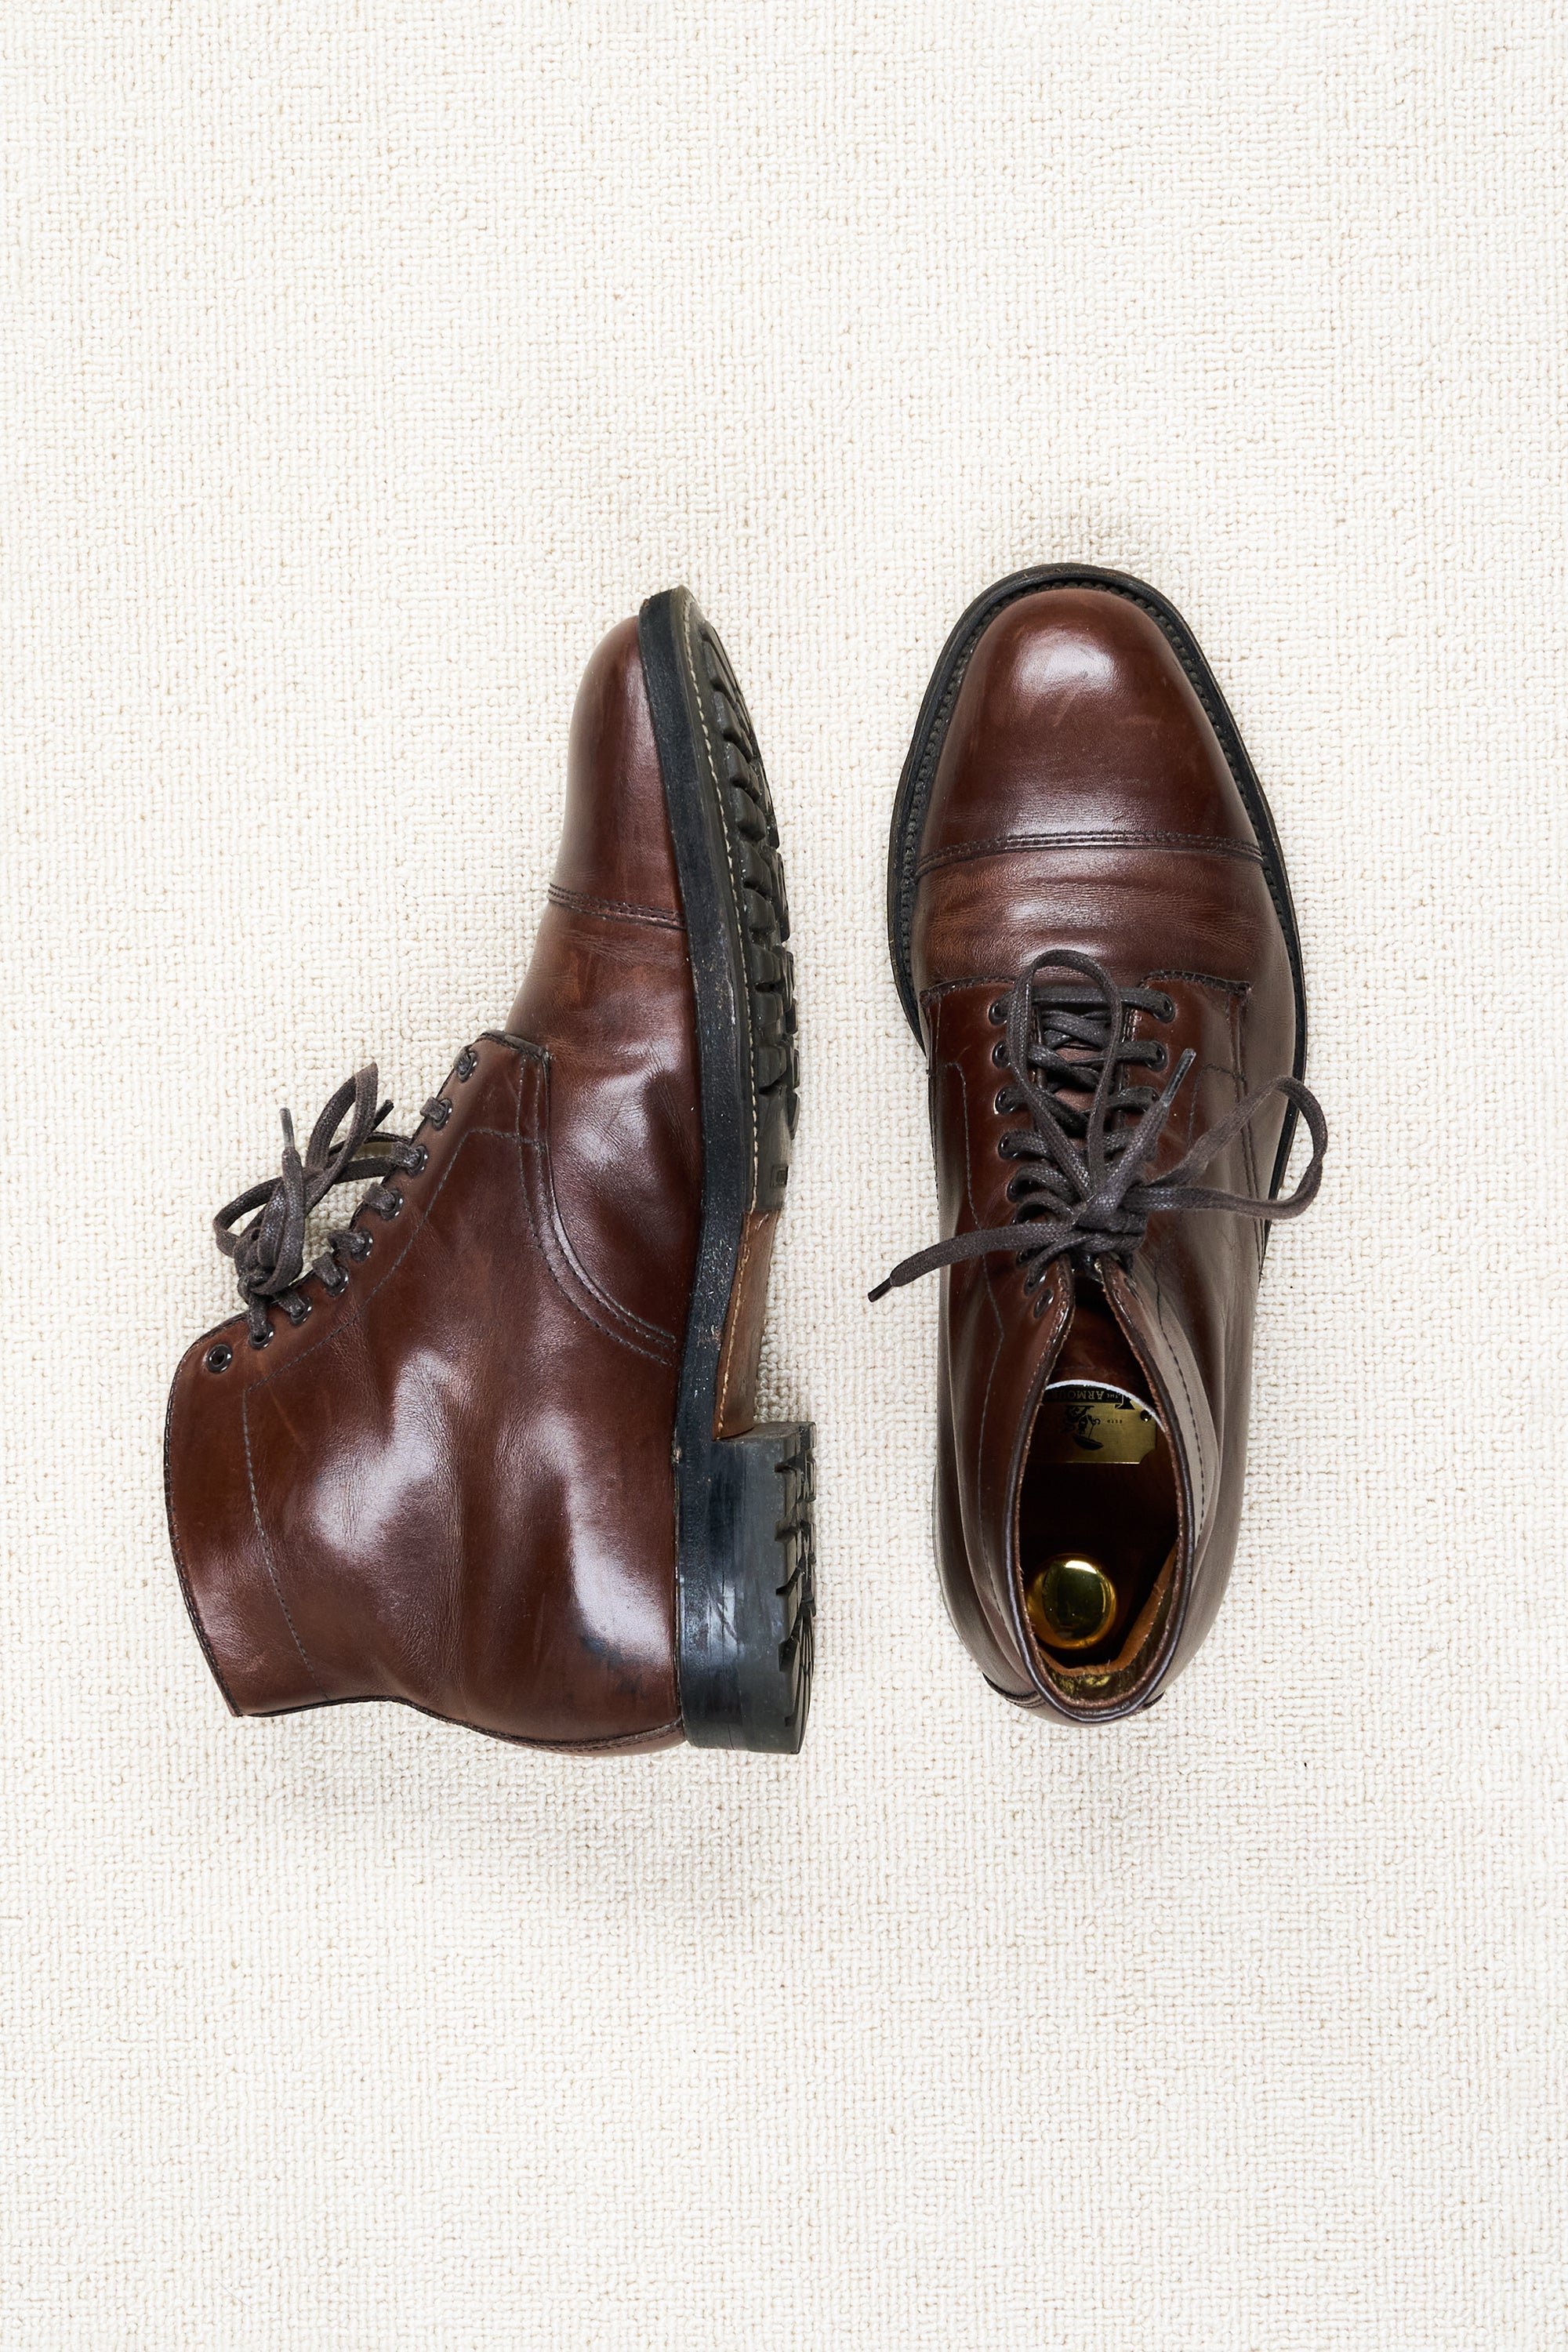 Alden Brown Calf Boots